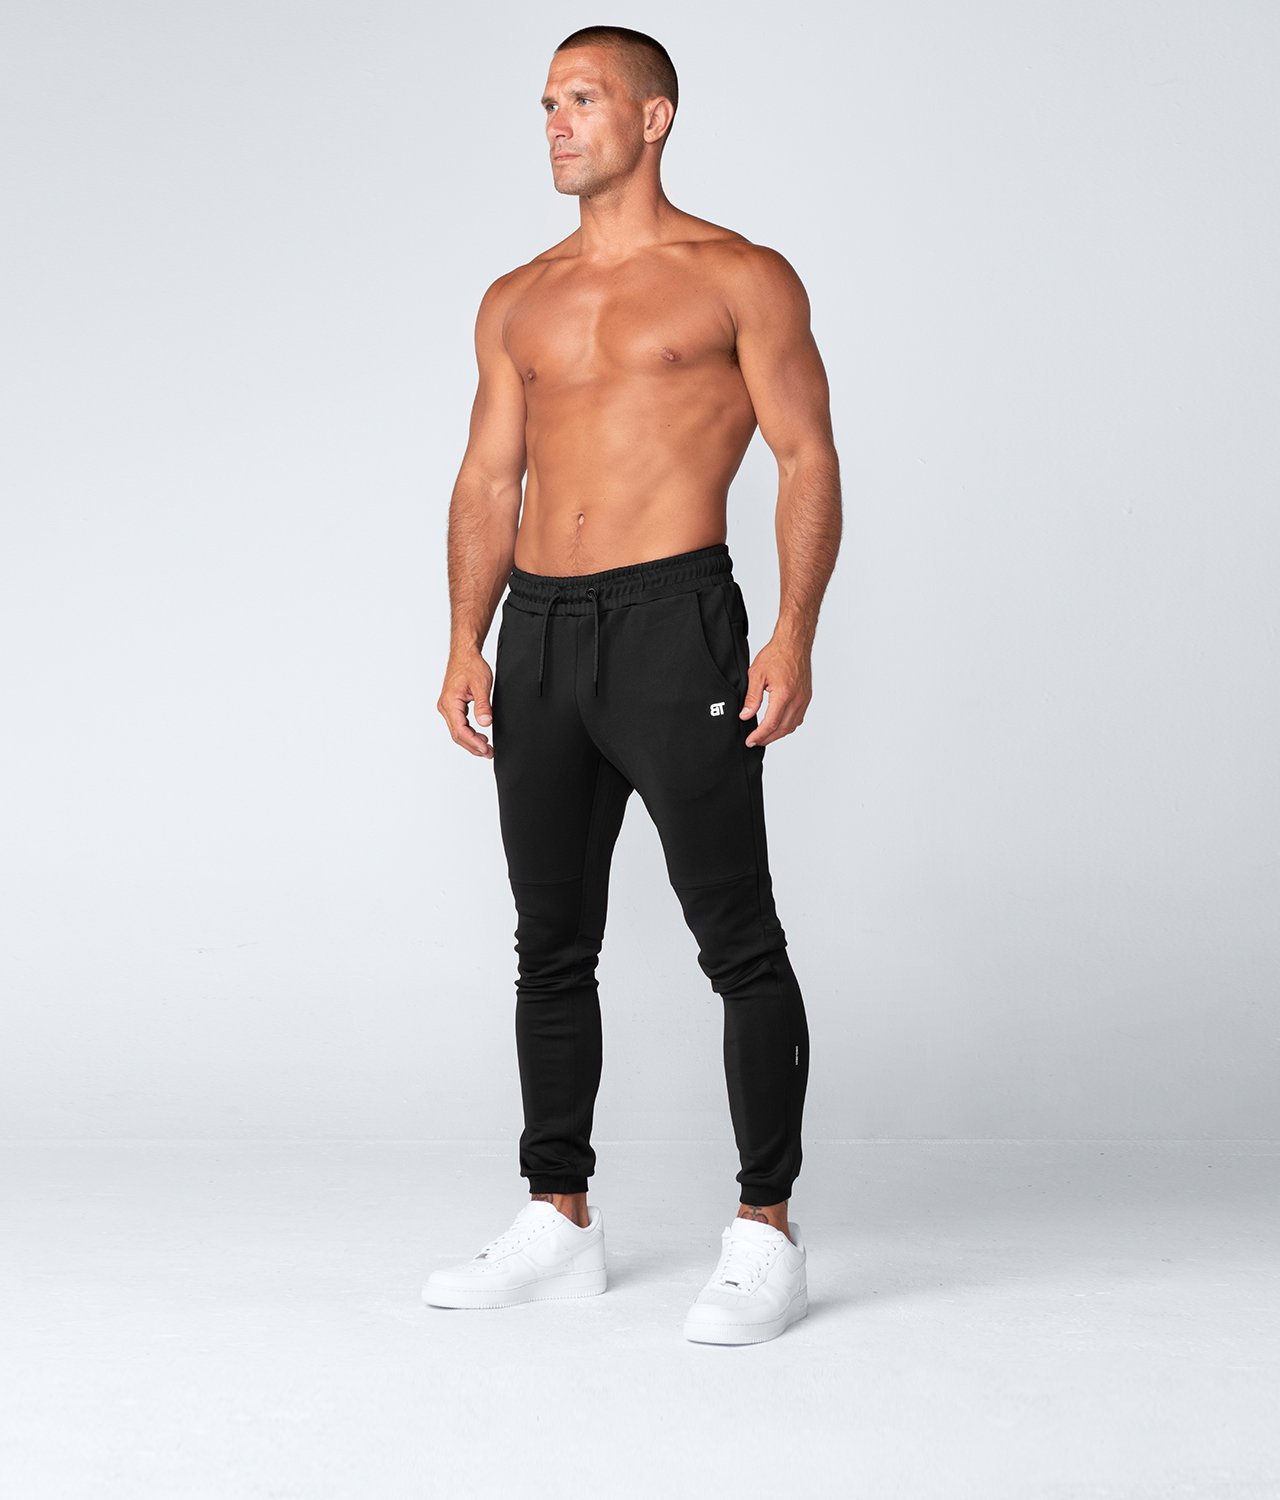 Men's Gym Workout Pants, Sports Fitness Joggers